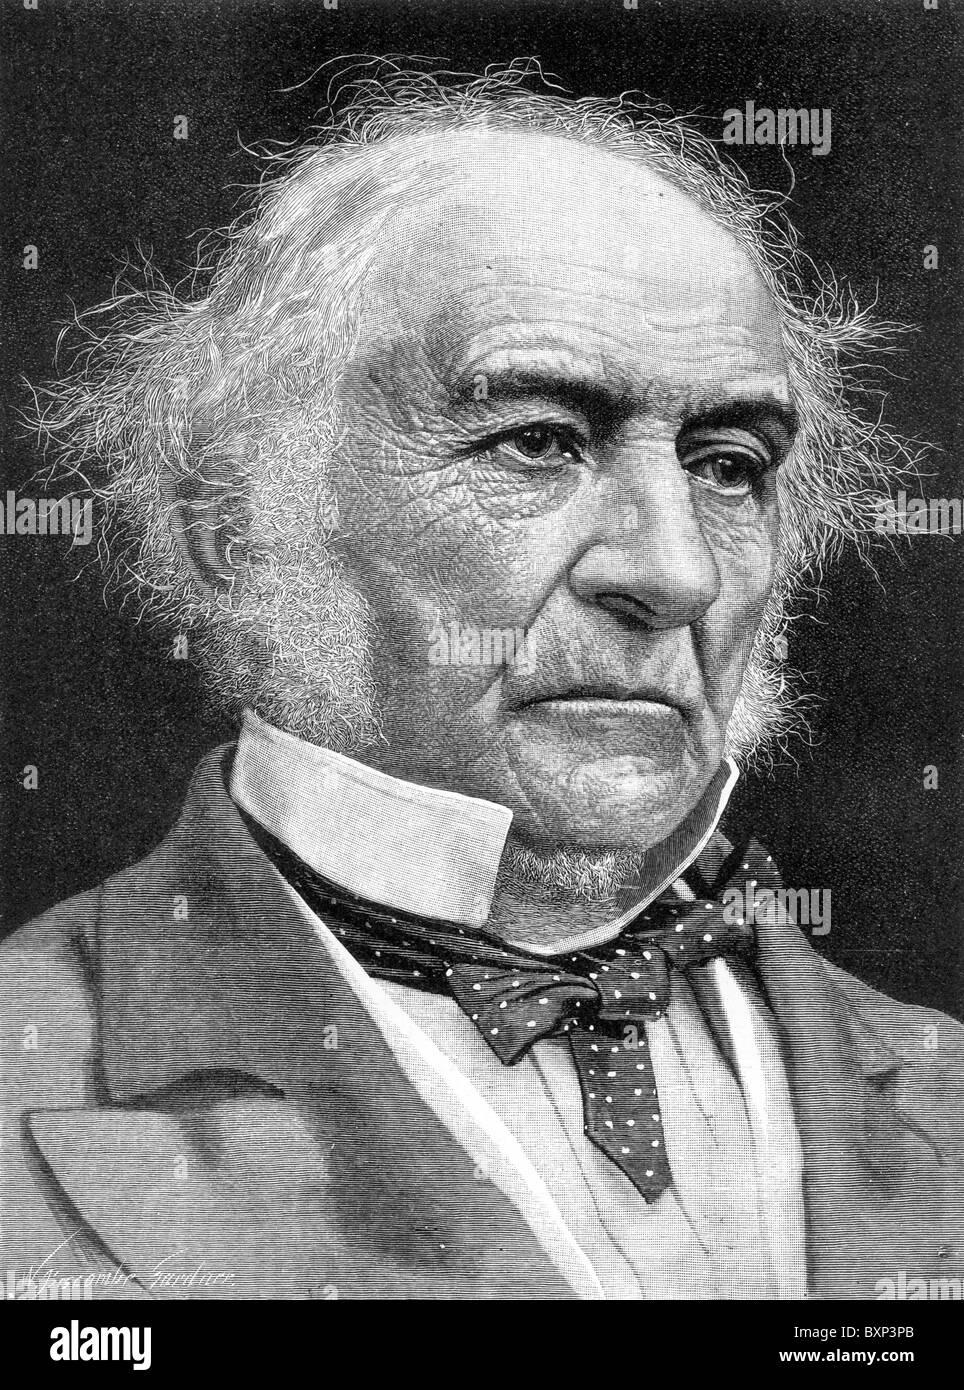 Portrait of William Ewart Gladstone, British Prime Minister and Liberal Politician; Black and White Illustration; Stock Photo